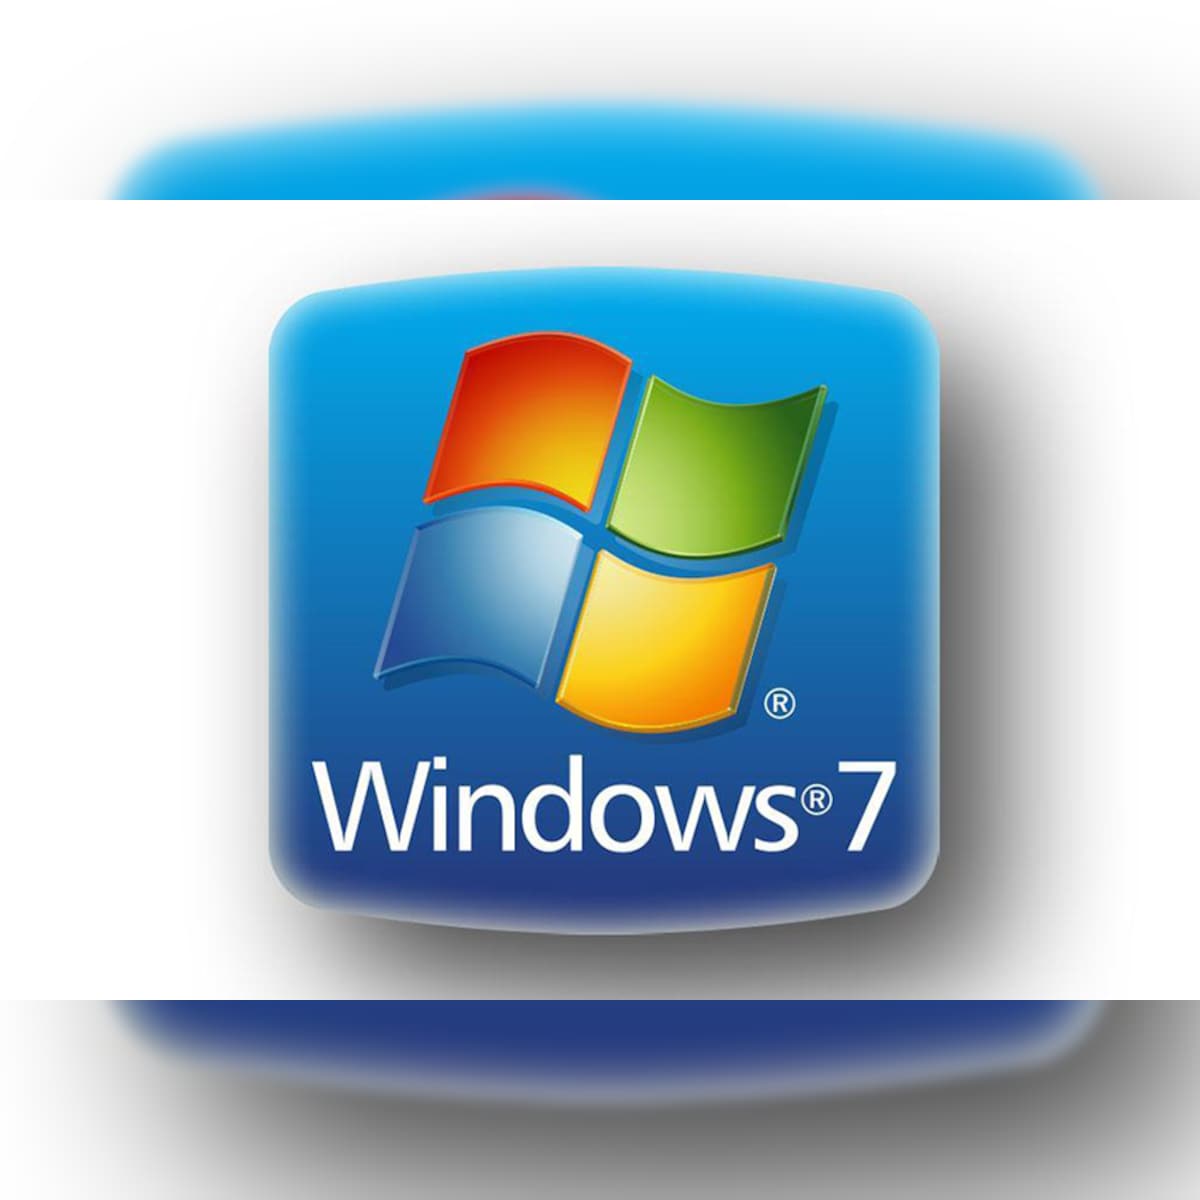 Windows 7 live chat help